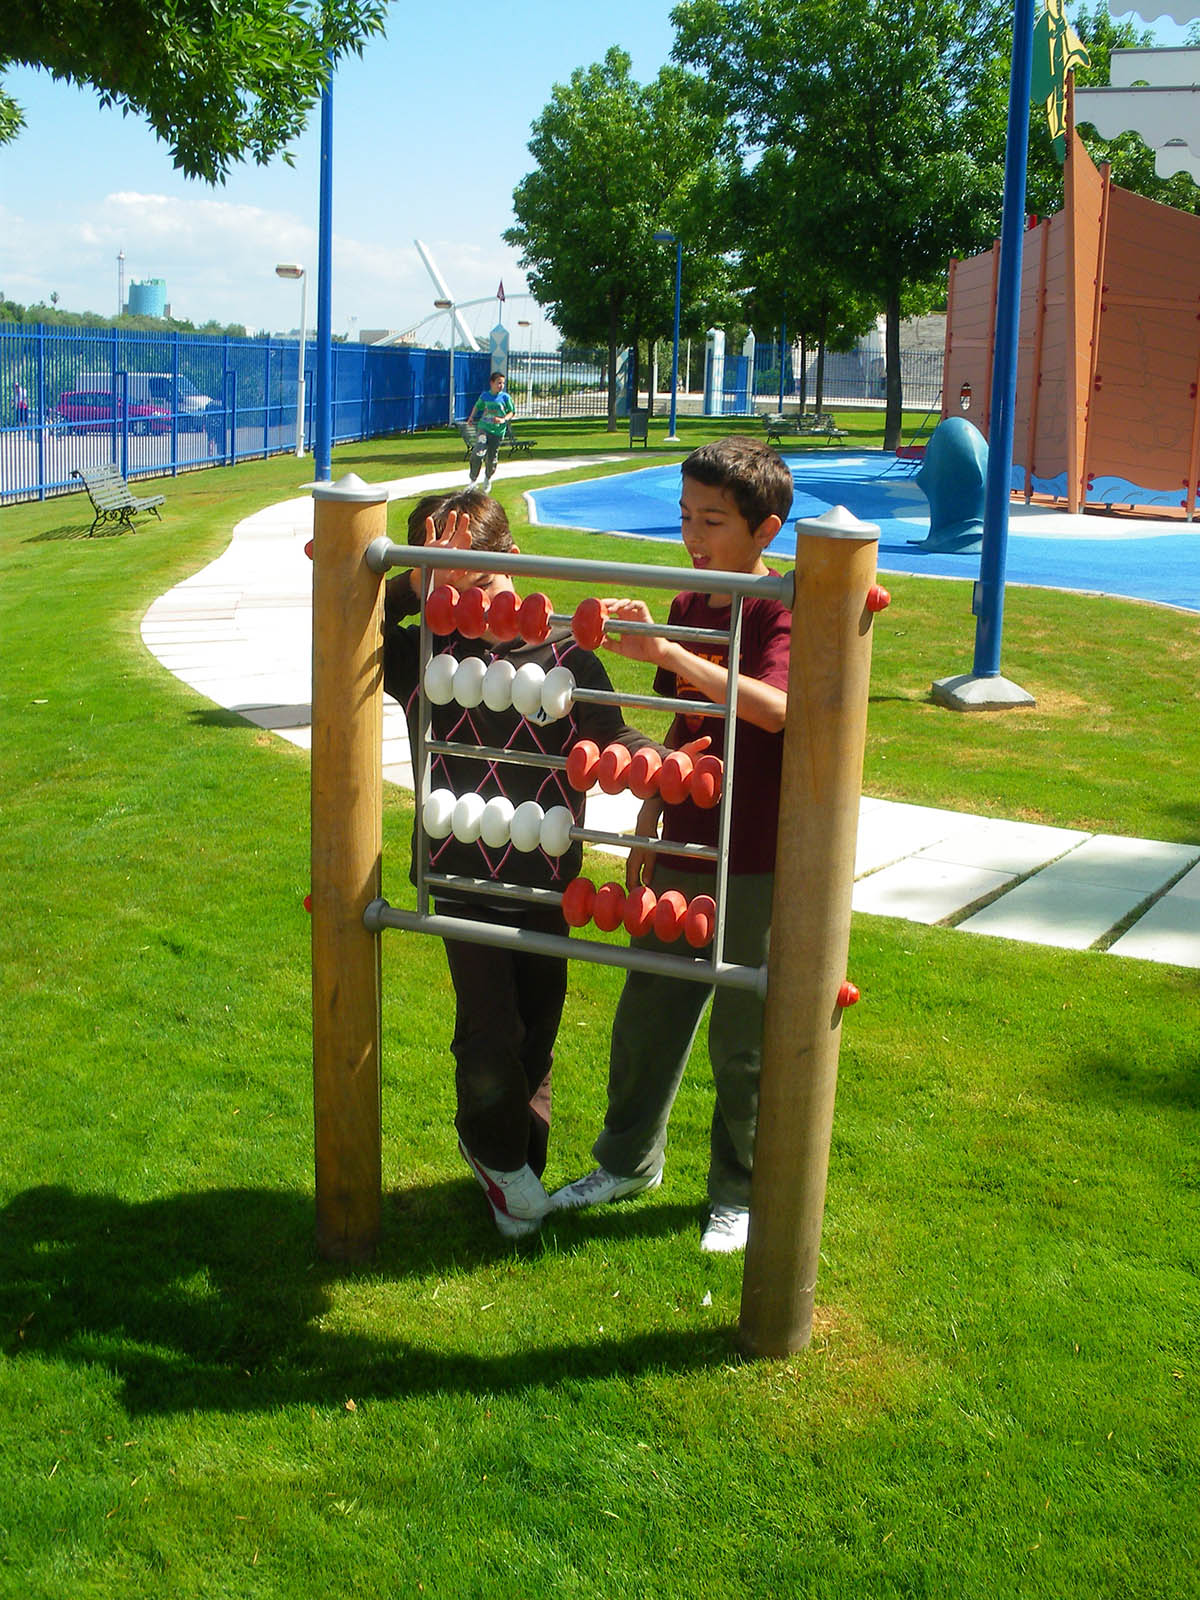 Playground Activity Panels